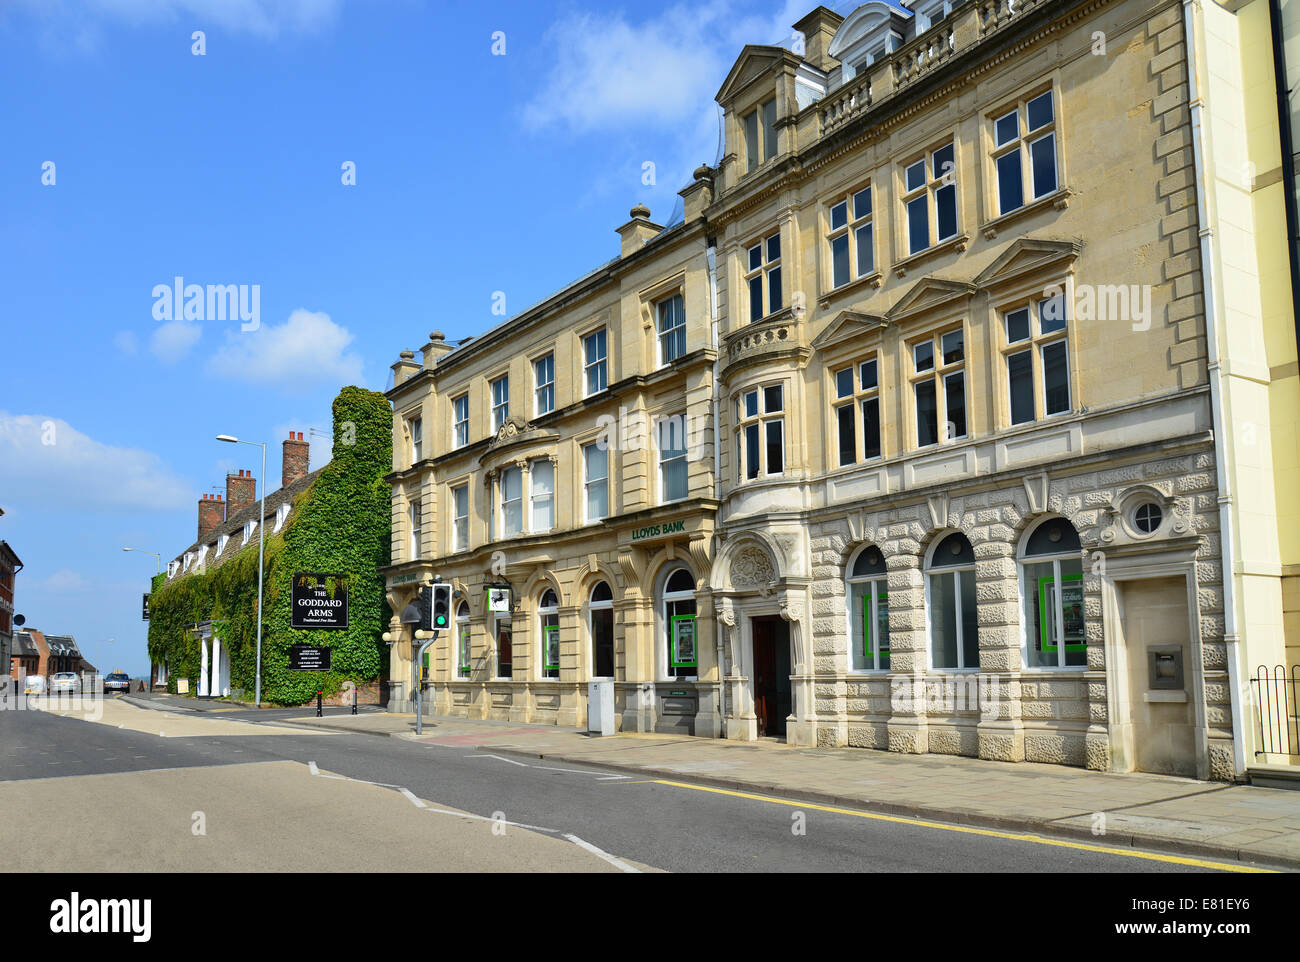 High Street, Old Town, Swindon, Wiltshire, England, United Kingdom Stock Photo